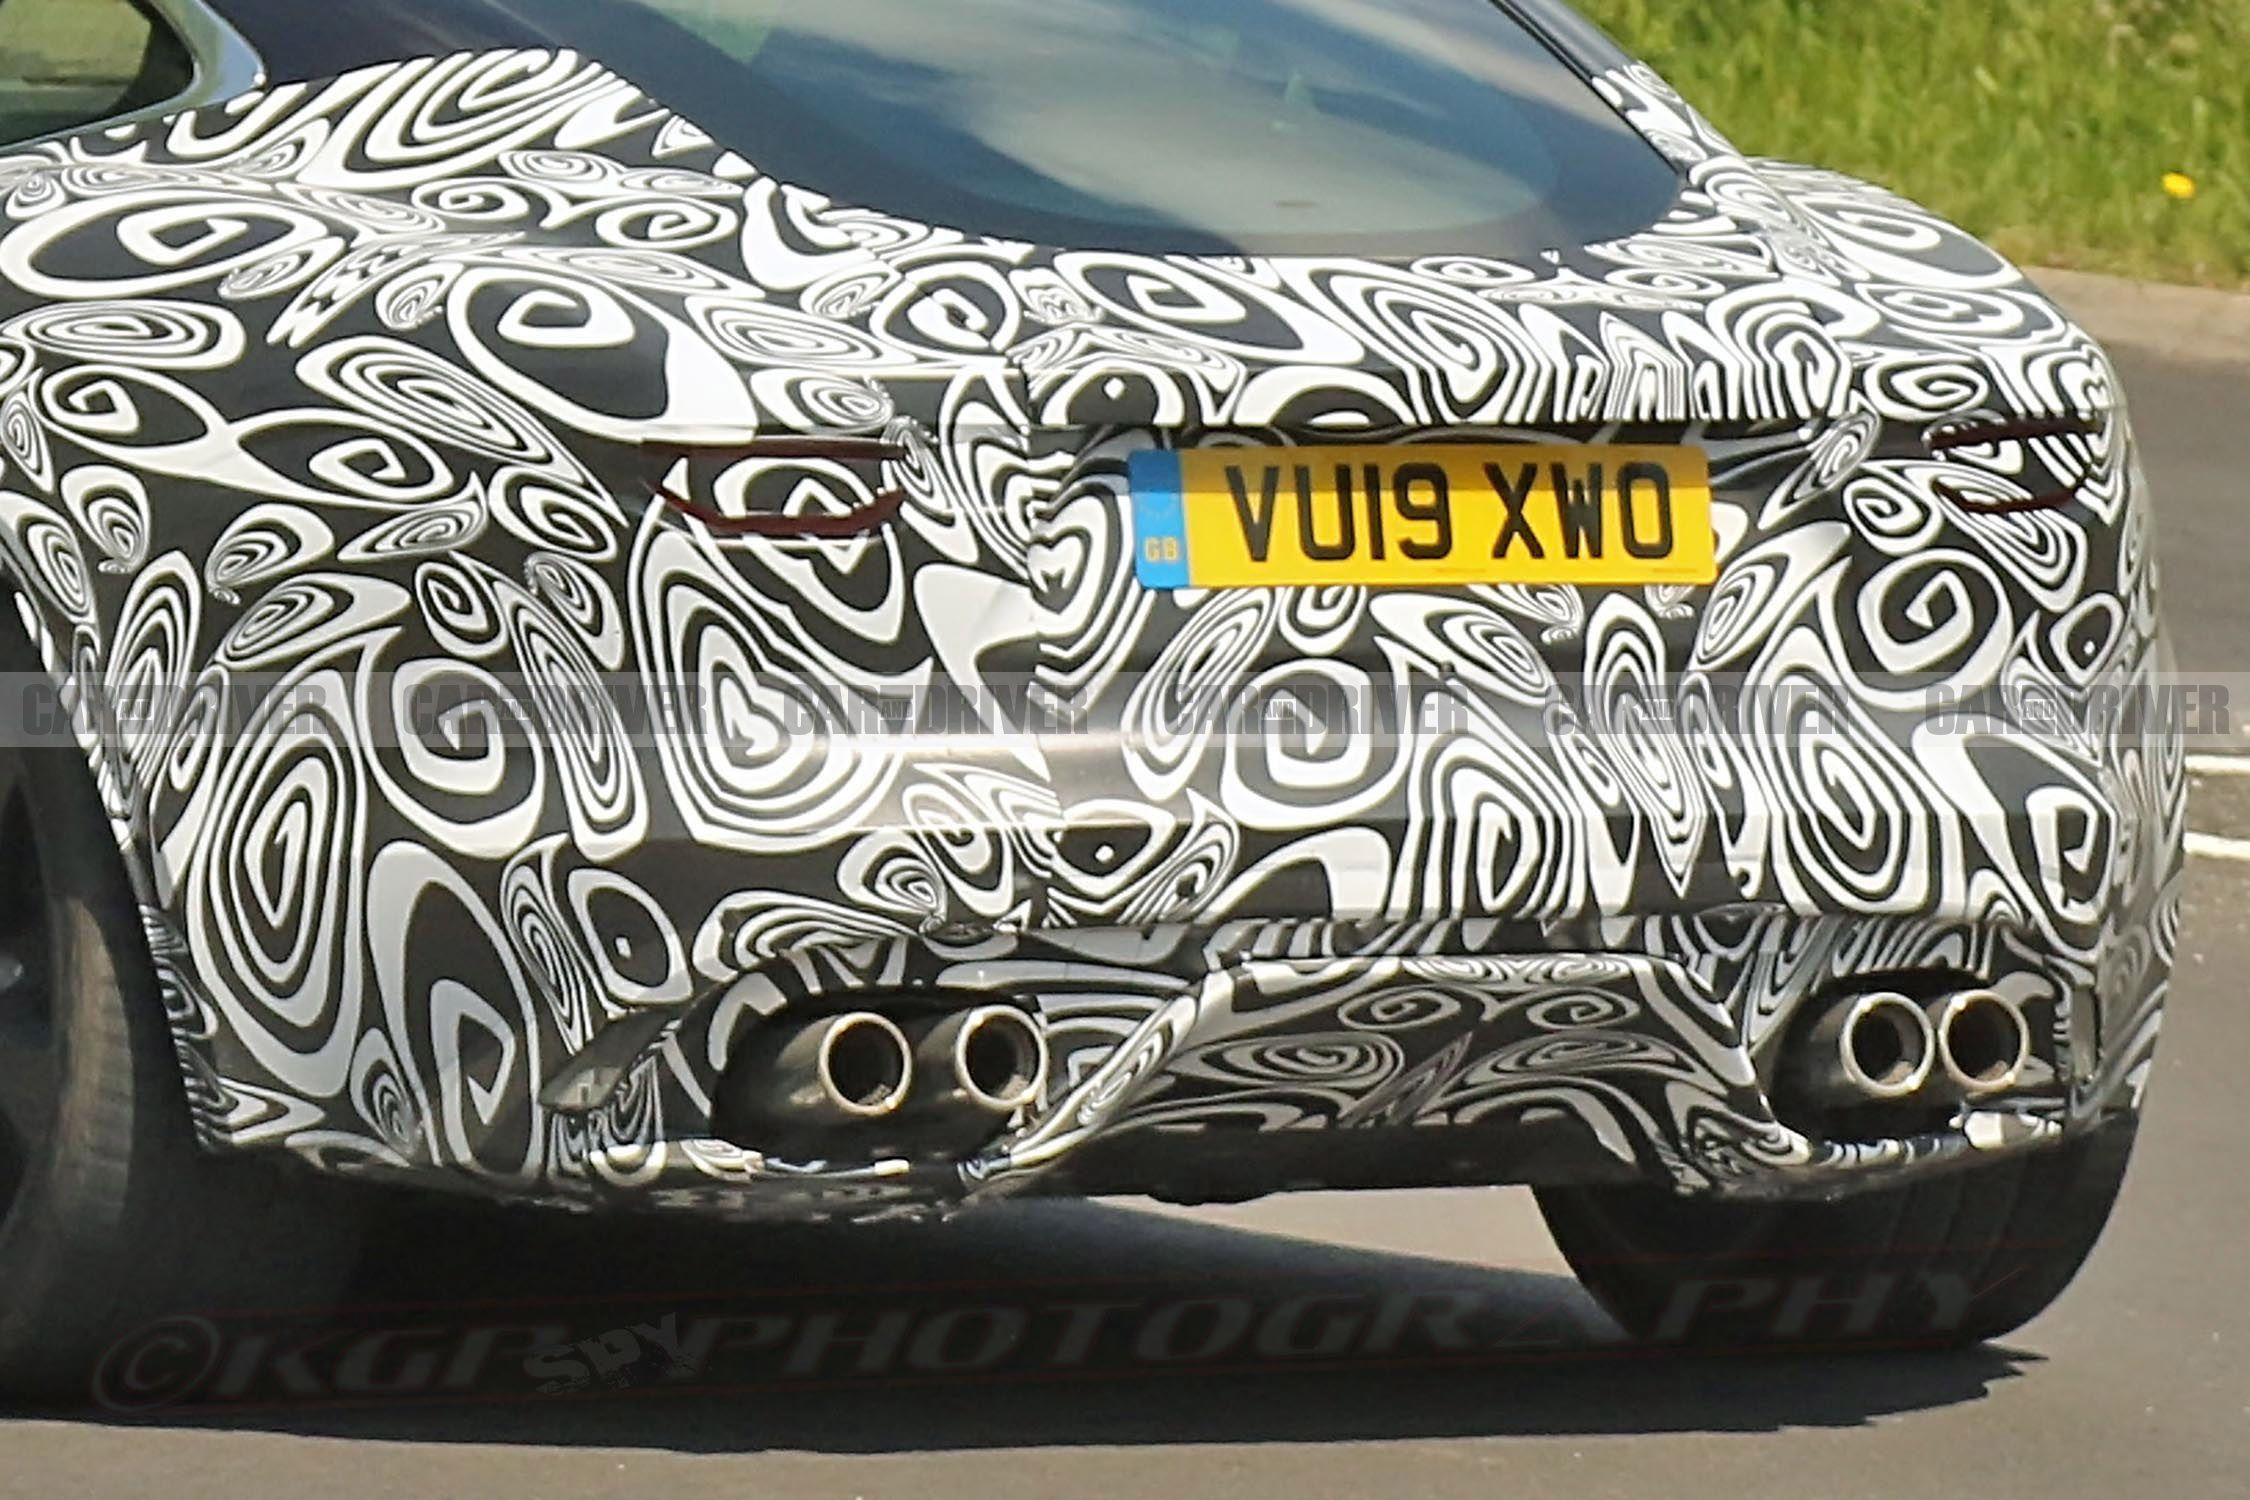 2021 Jaguar F-Type Facelift Leaked, Reveals Sleek Front Fascia -  autoevolution